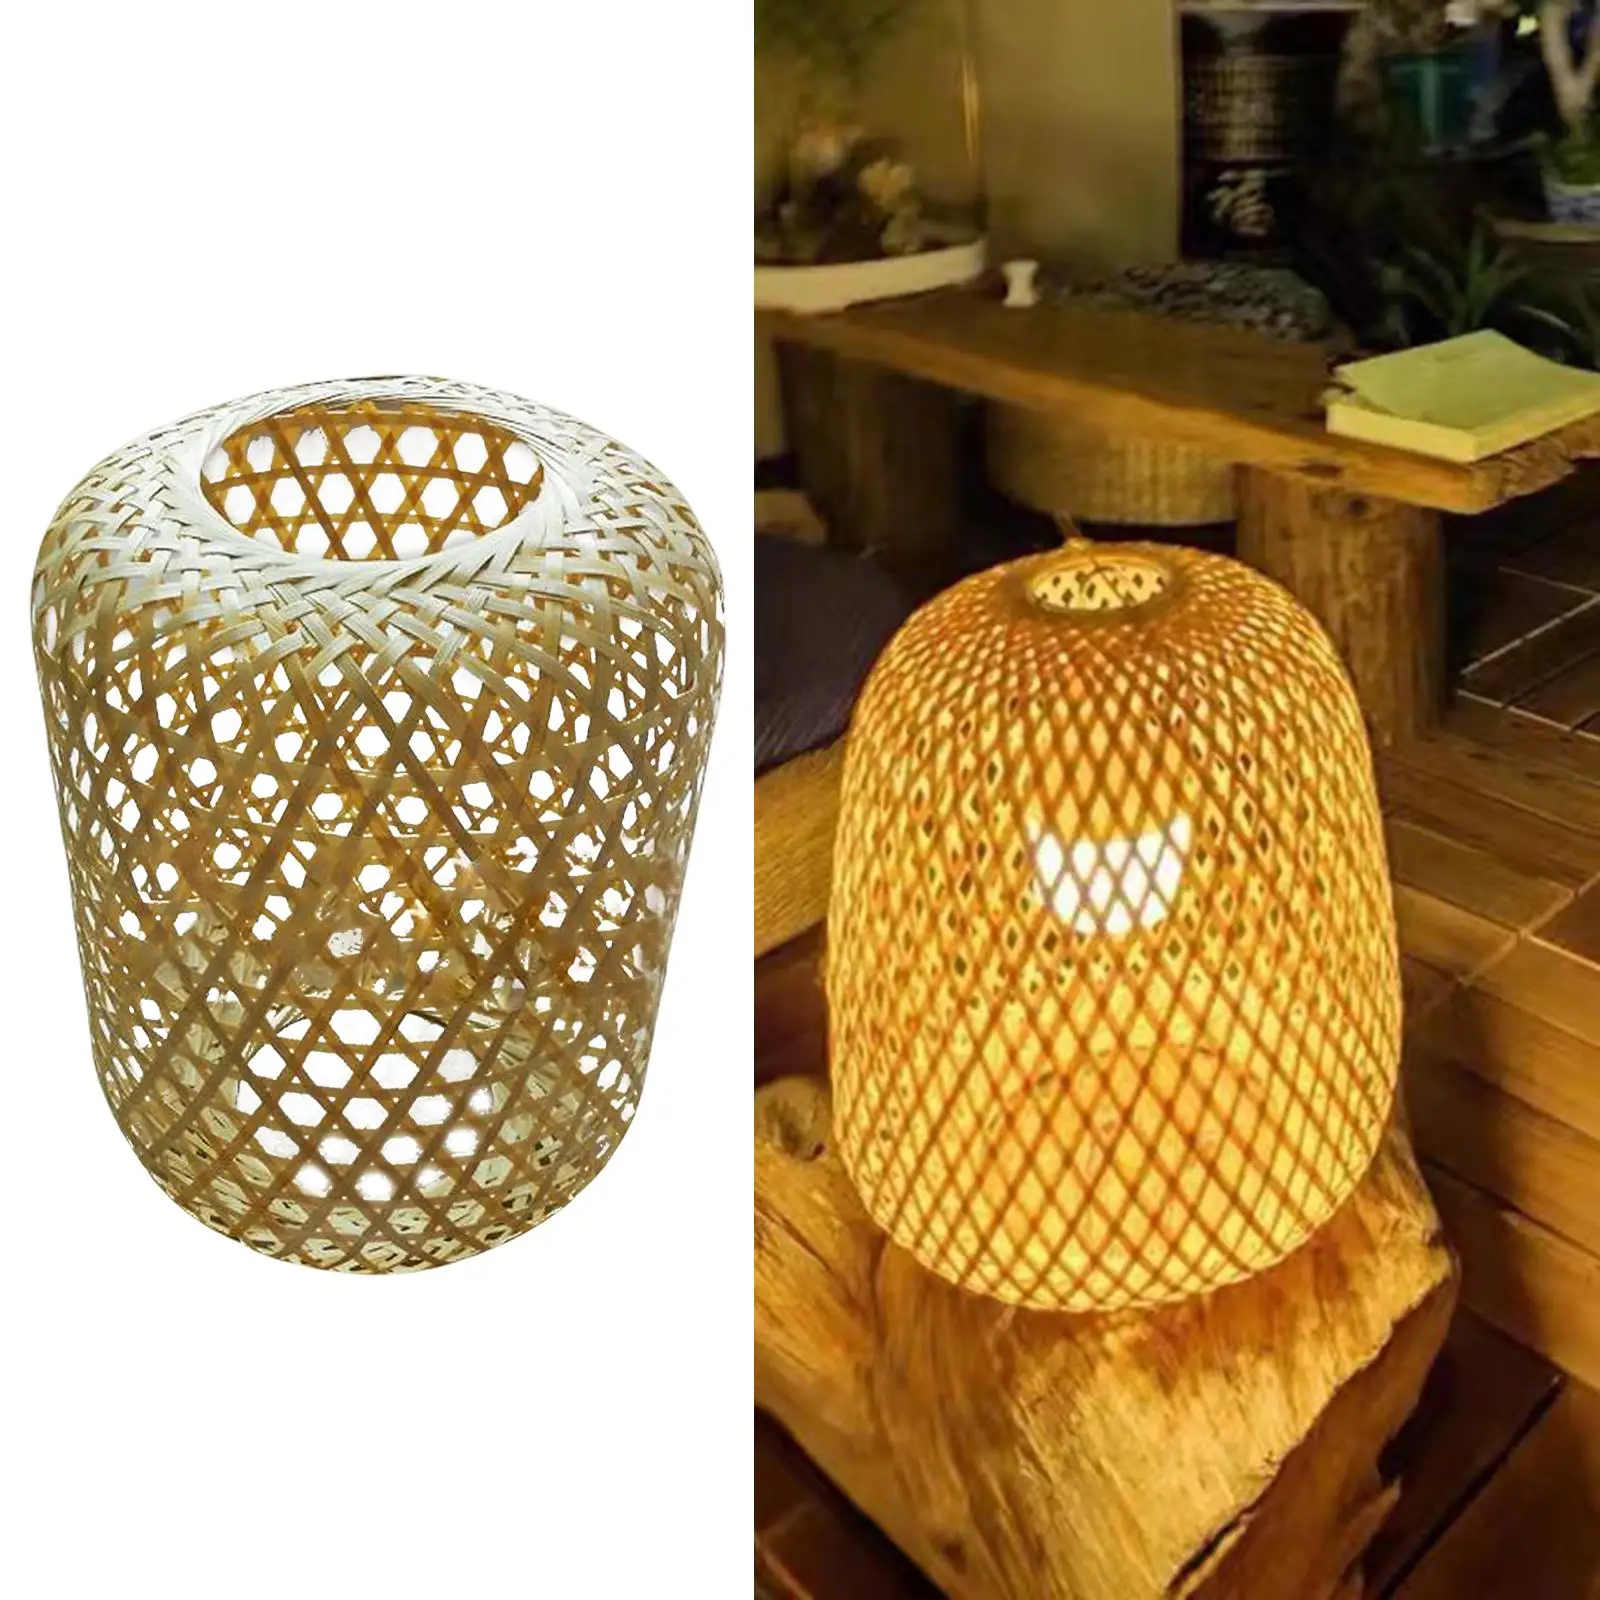 Woven Bamboo Lamp Shade Lampshade Hanging Pendant Light Fitting Decorative